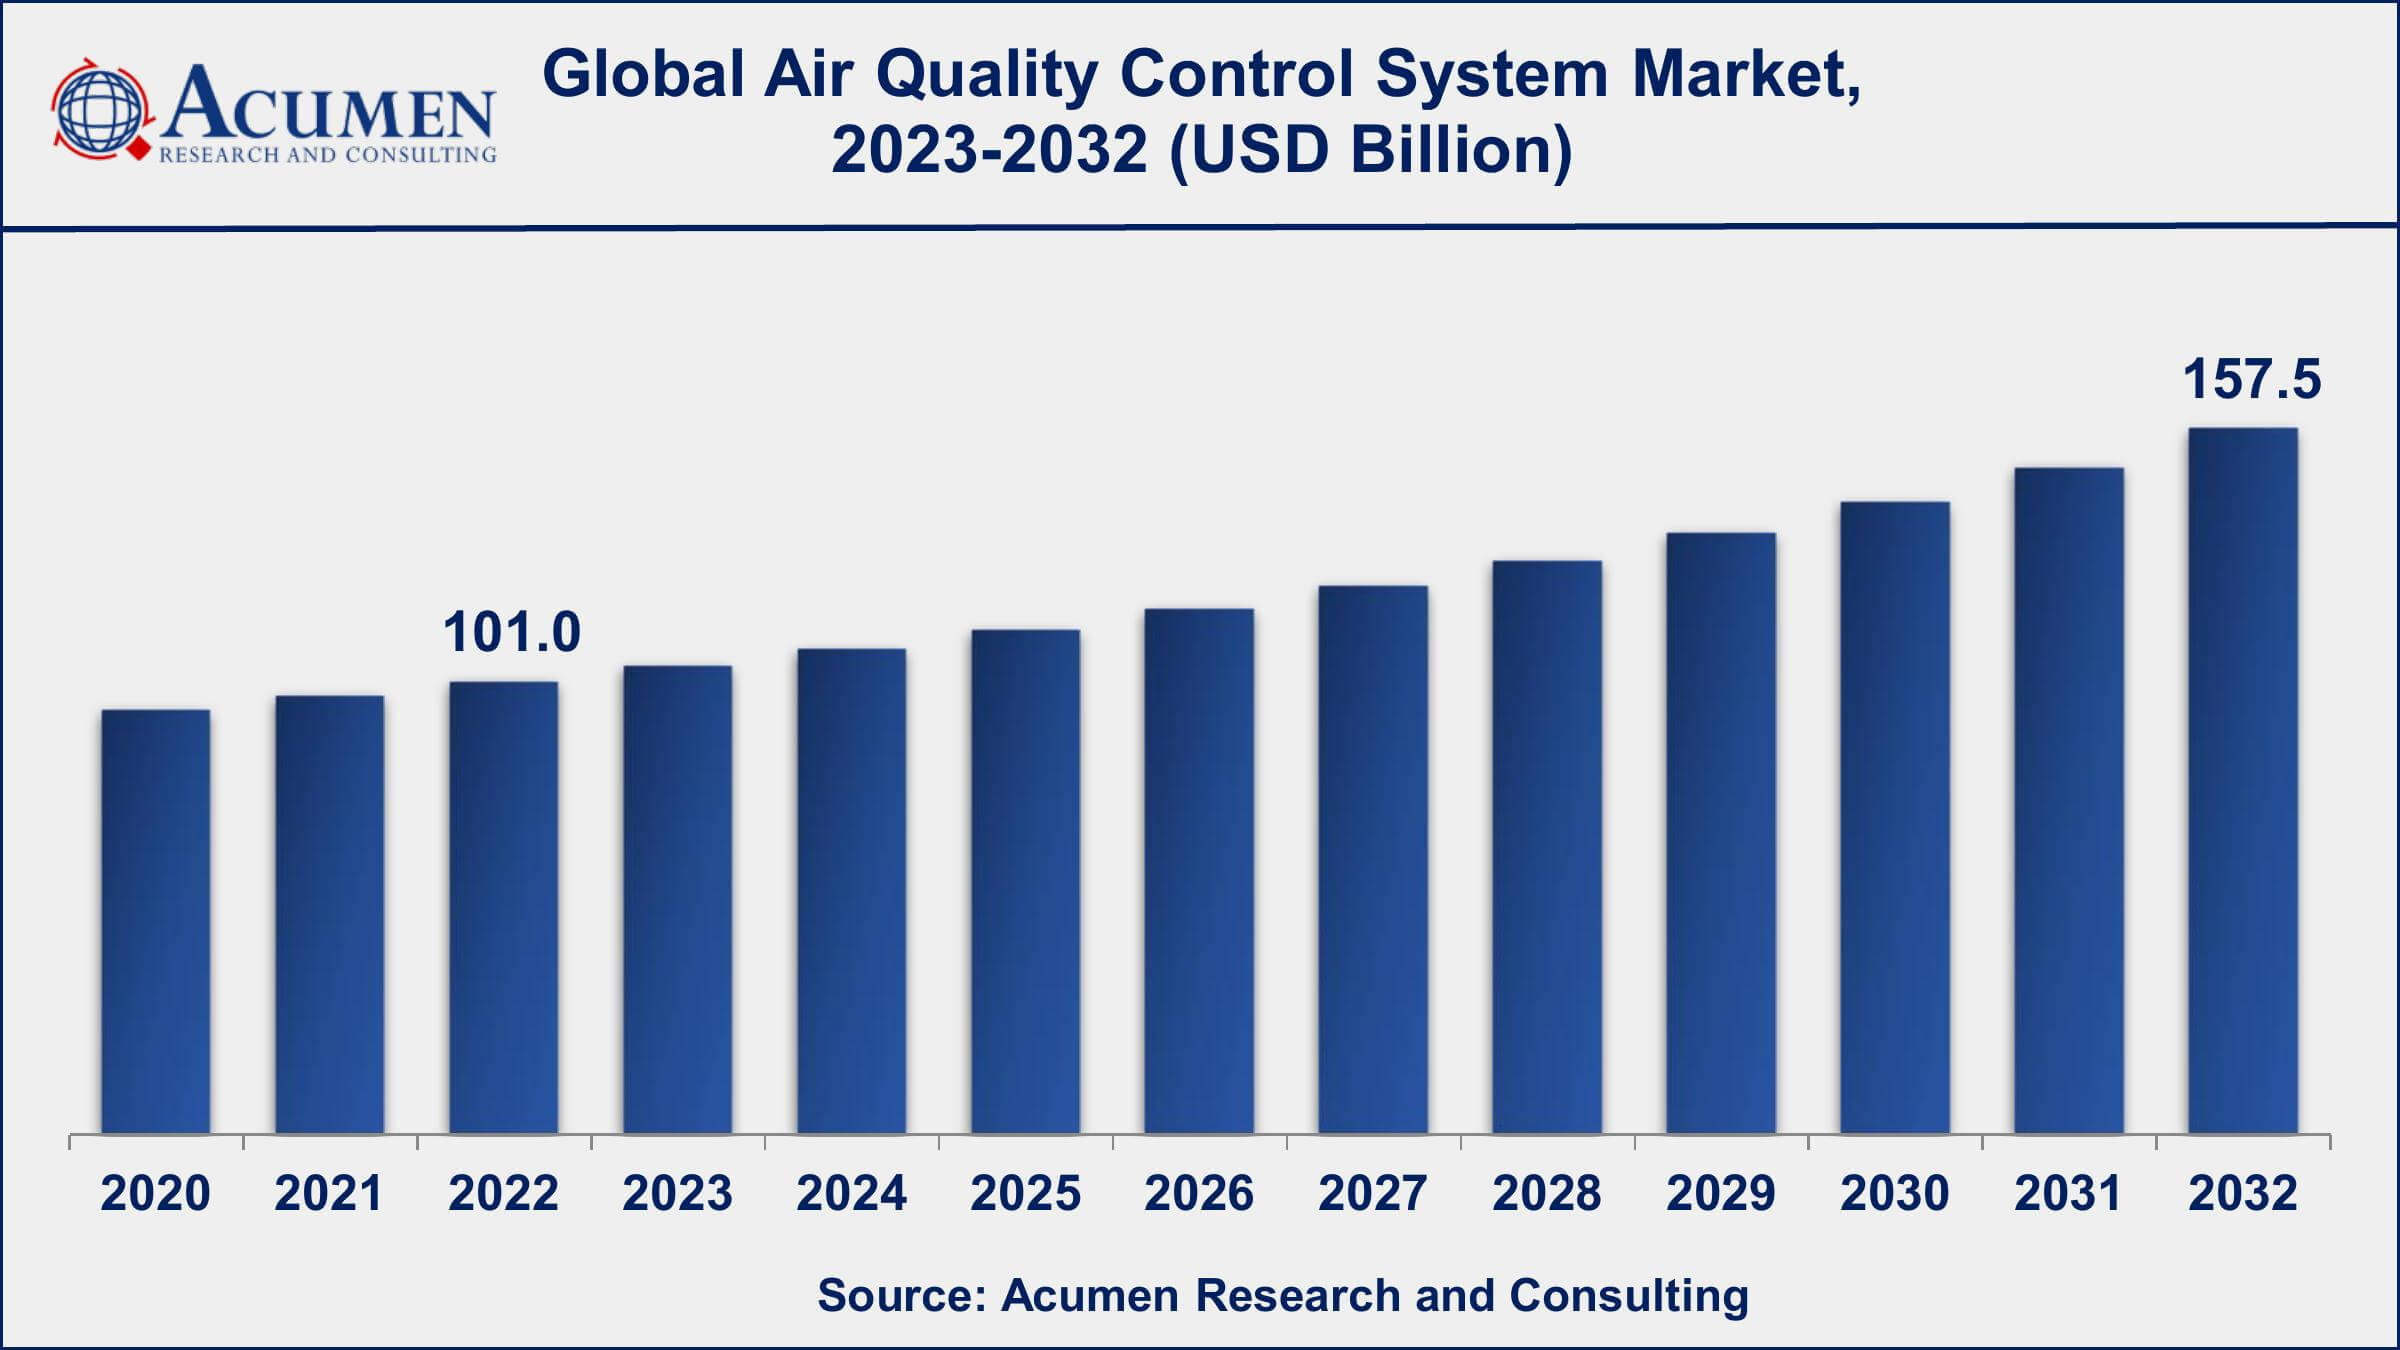 Global Air Quality Control System Market Dynamics